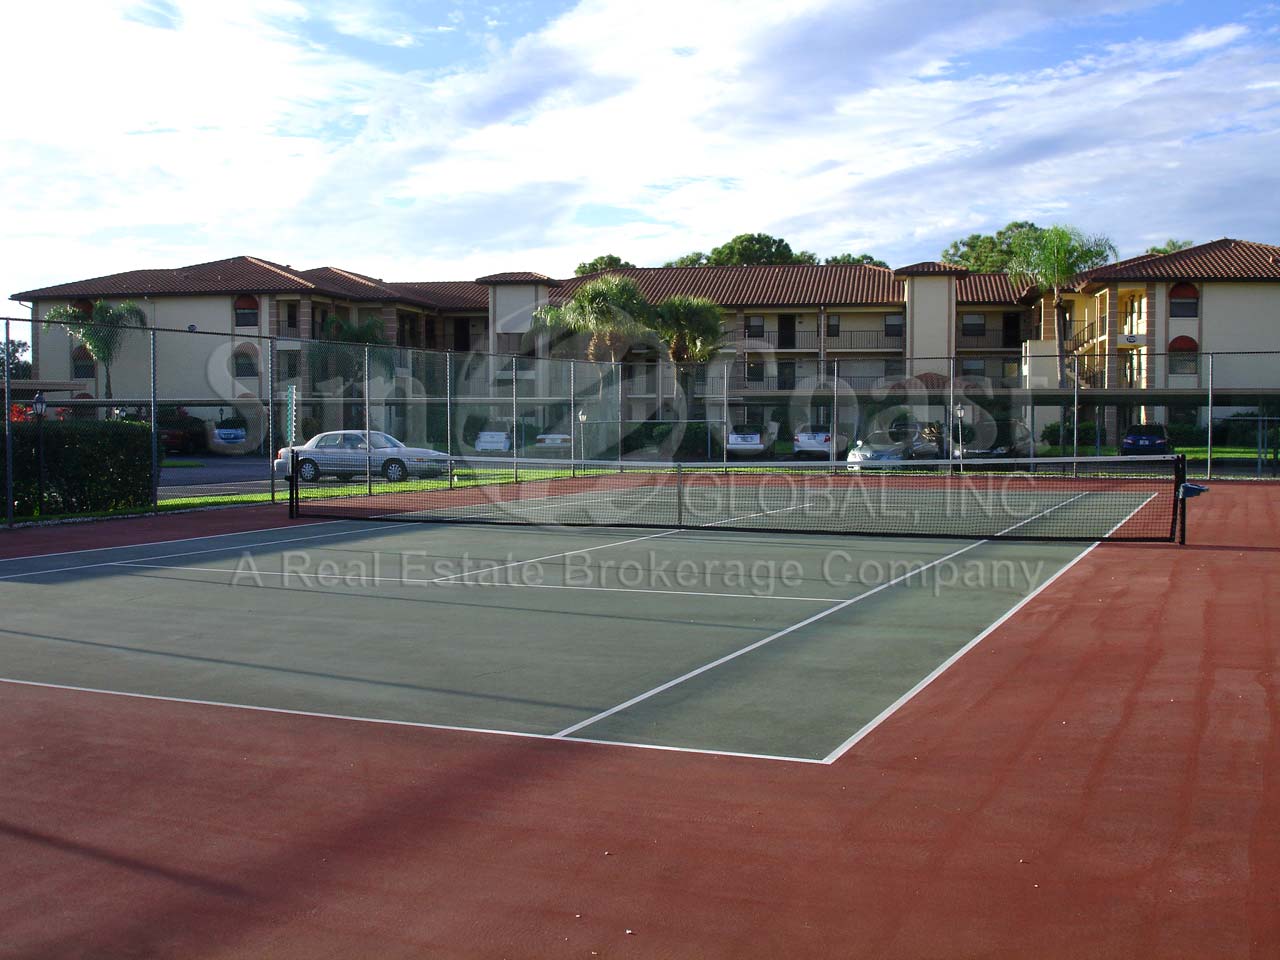 Countryside Condos Tennis Courts